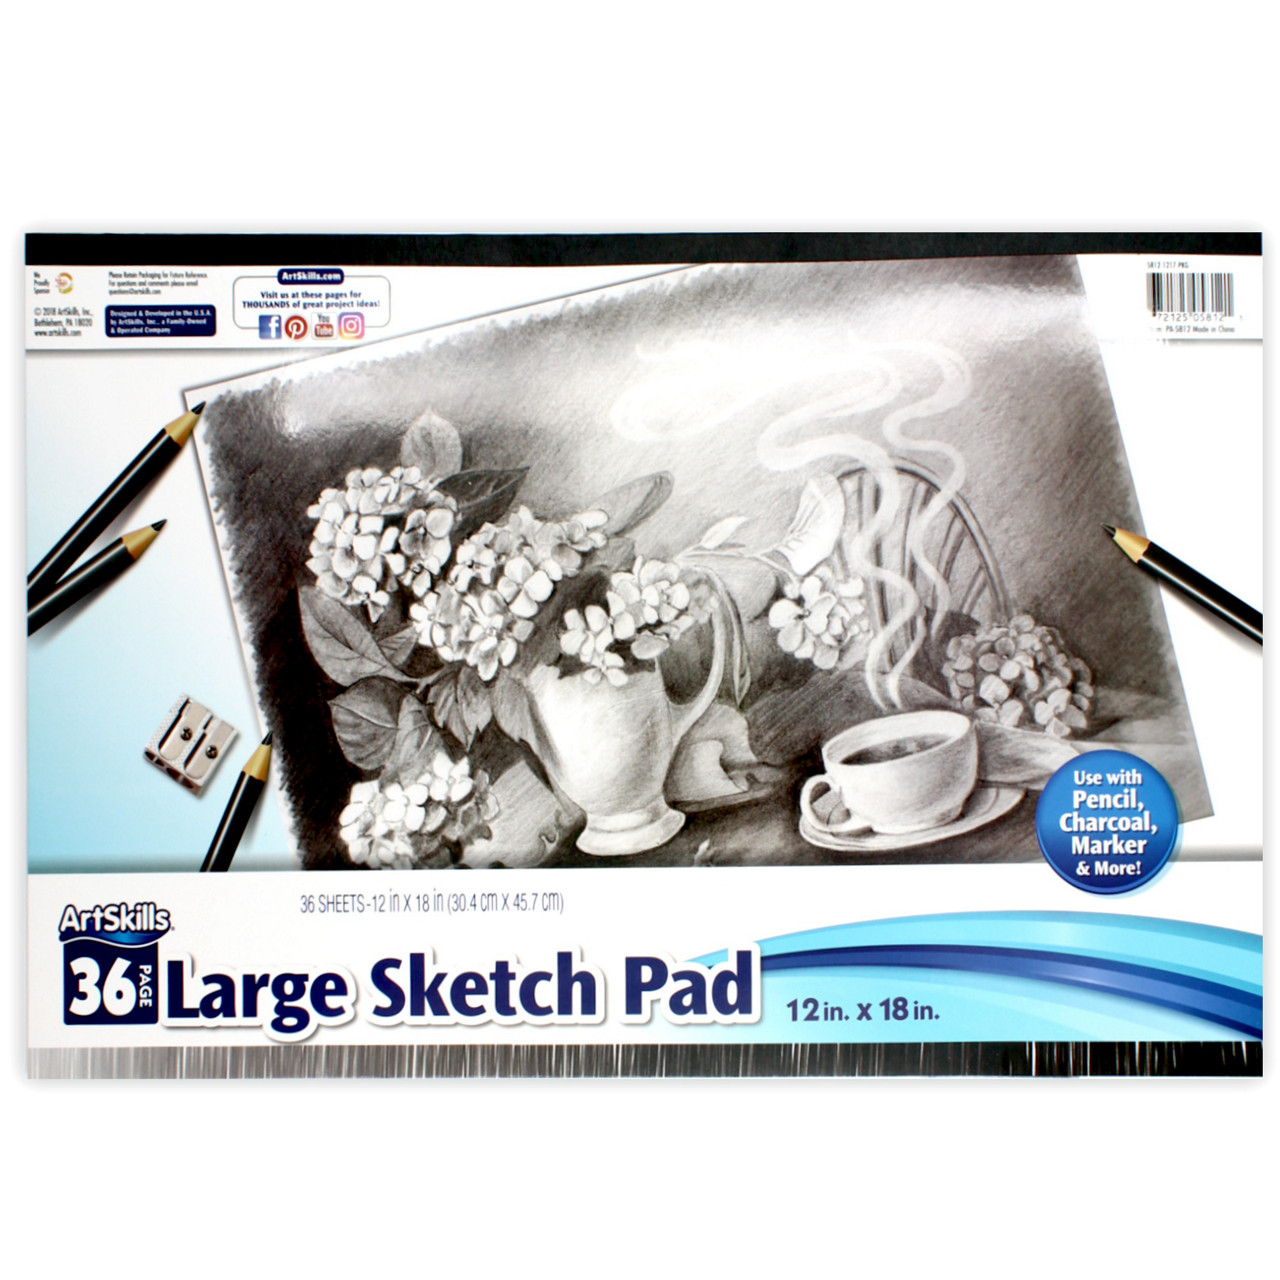 ArtSkills 12 x 18 Large Hardcover Drawing & Sketch Pad Notebook, 36 Sheets